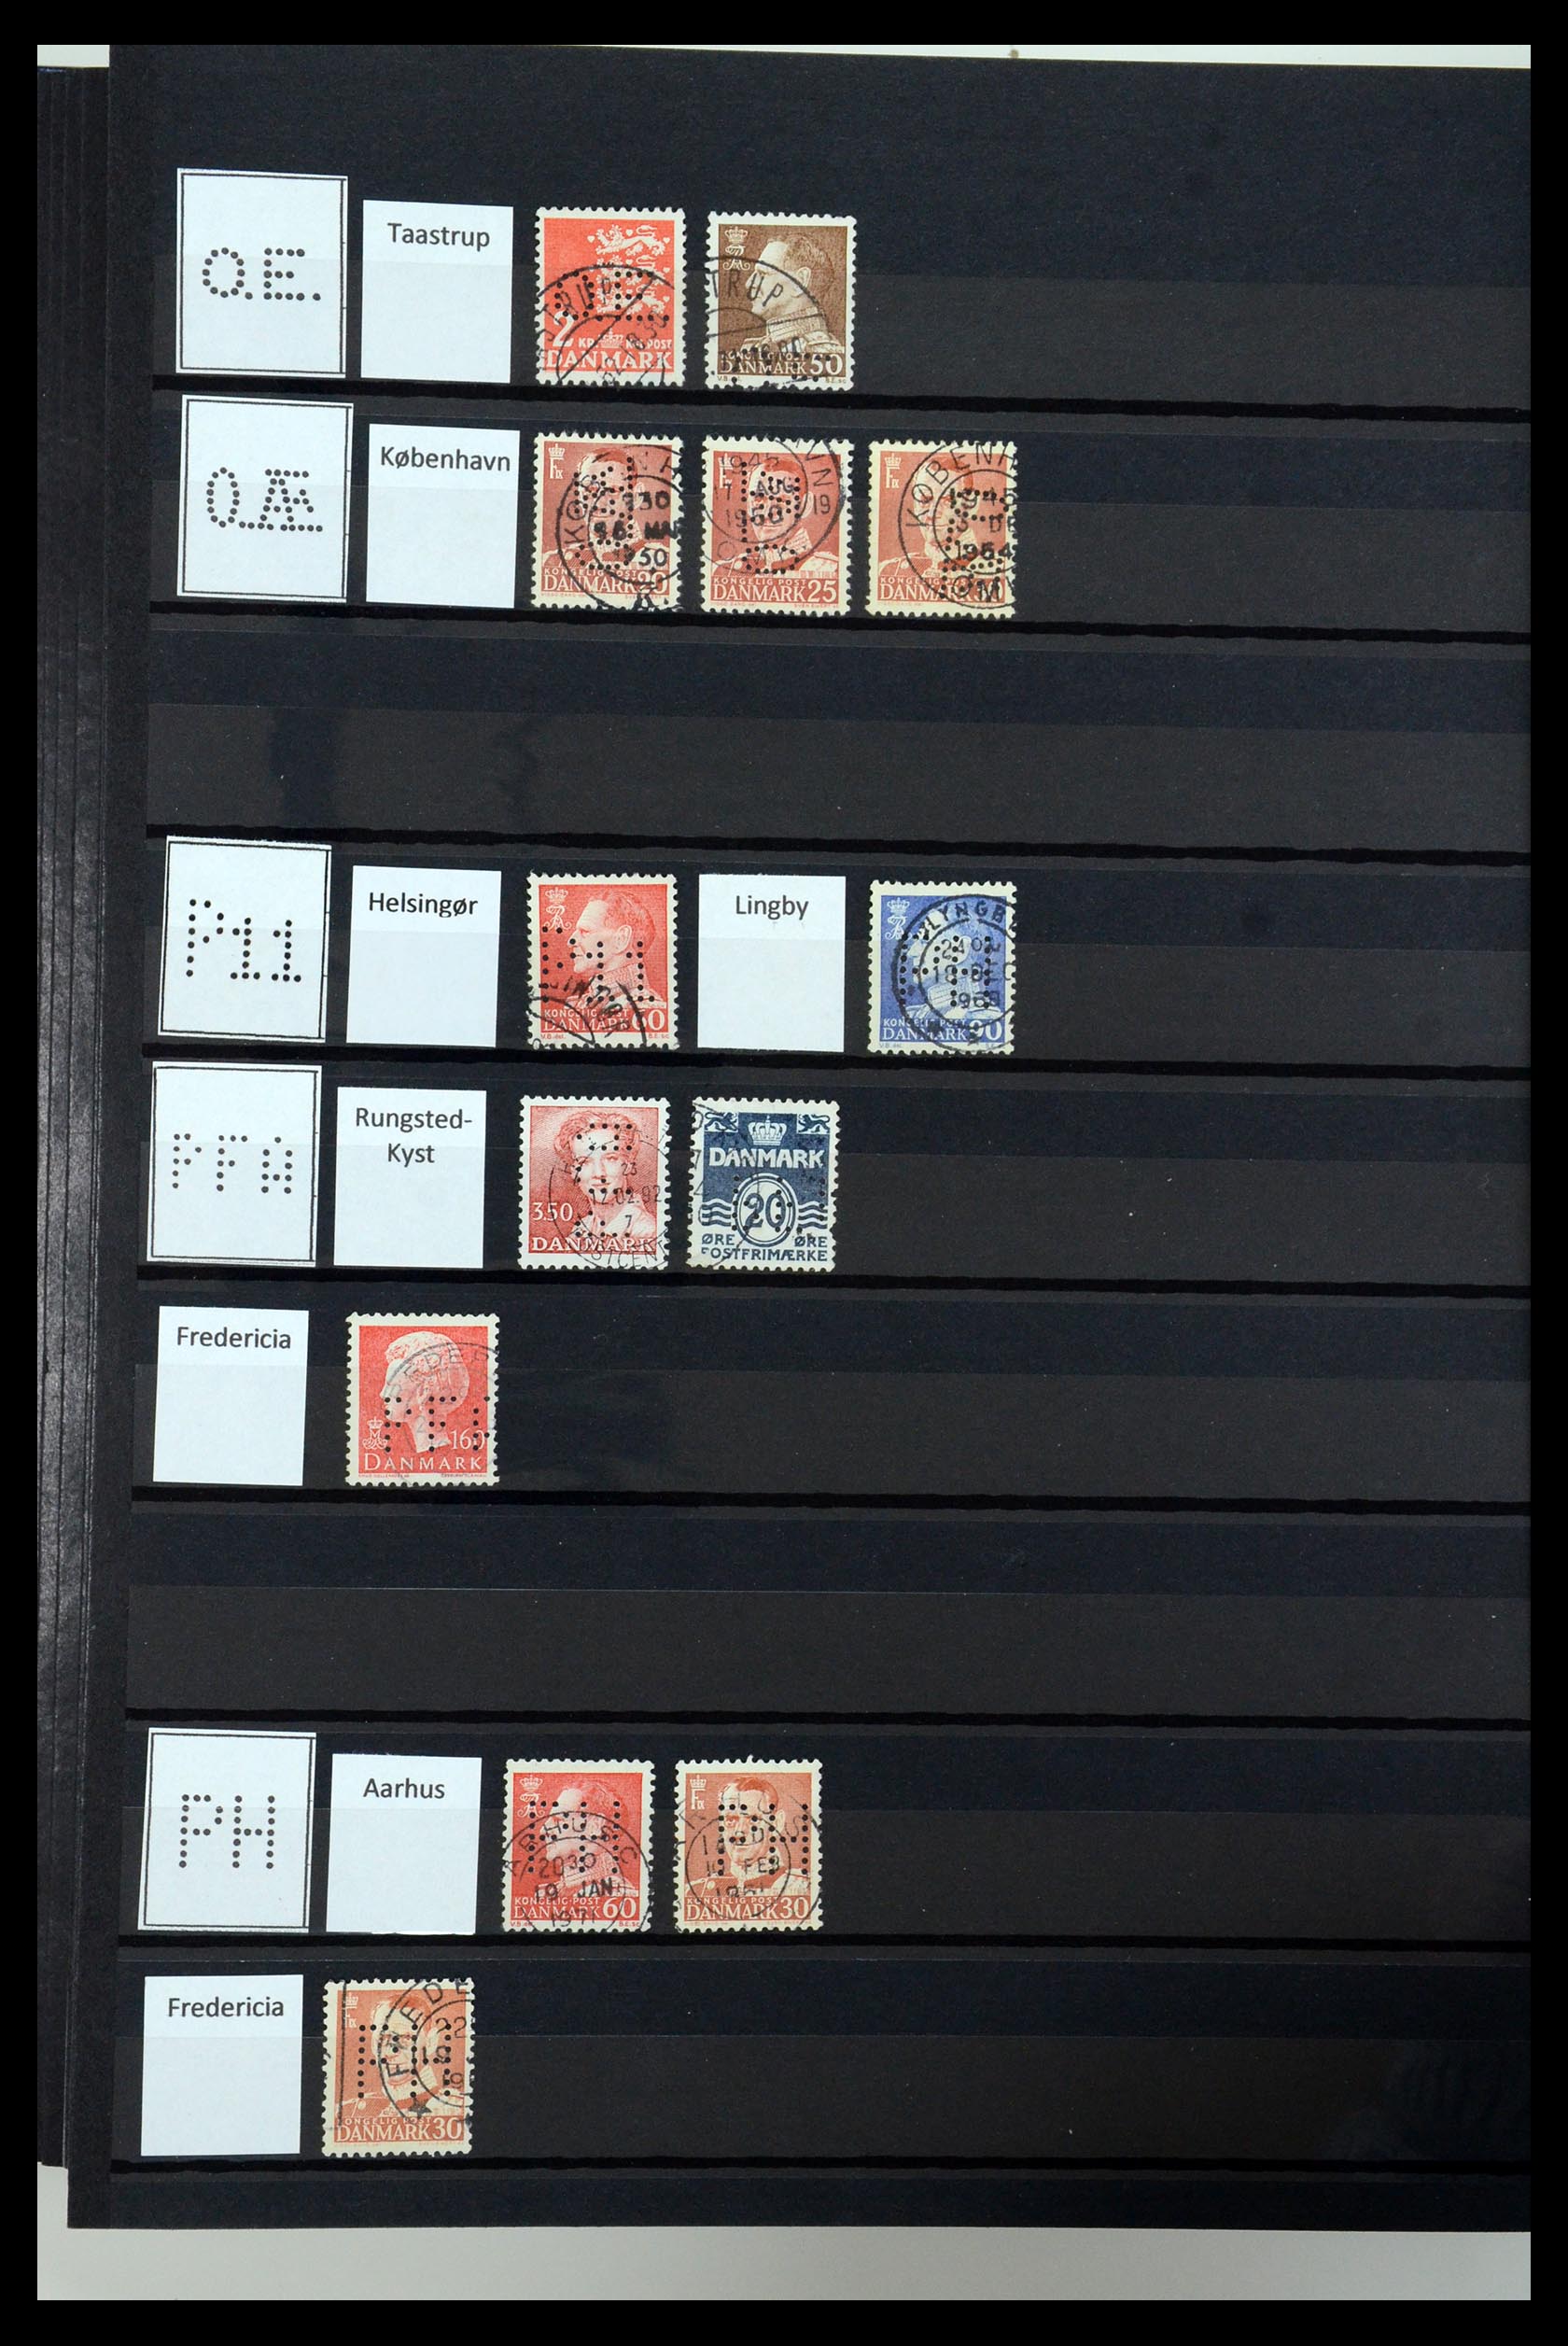 36396 099 - Stamp collection 36396 Denmark perfins.